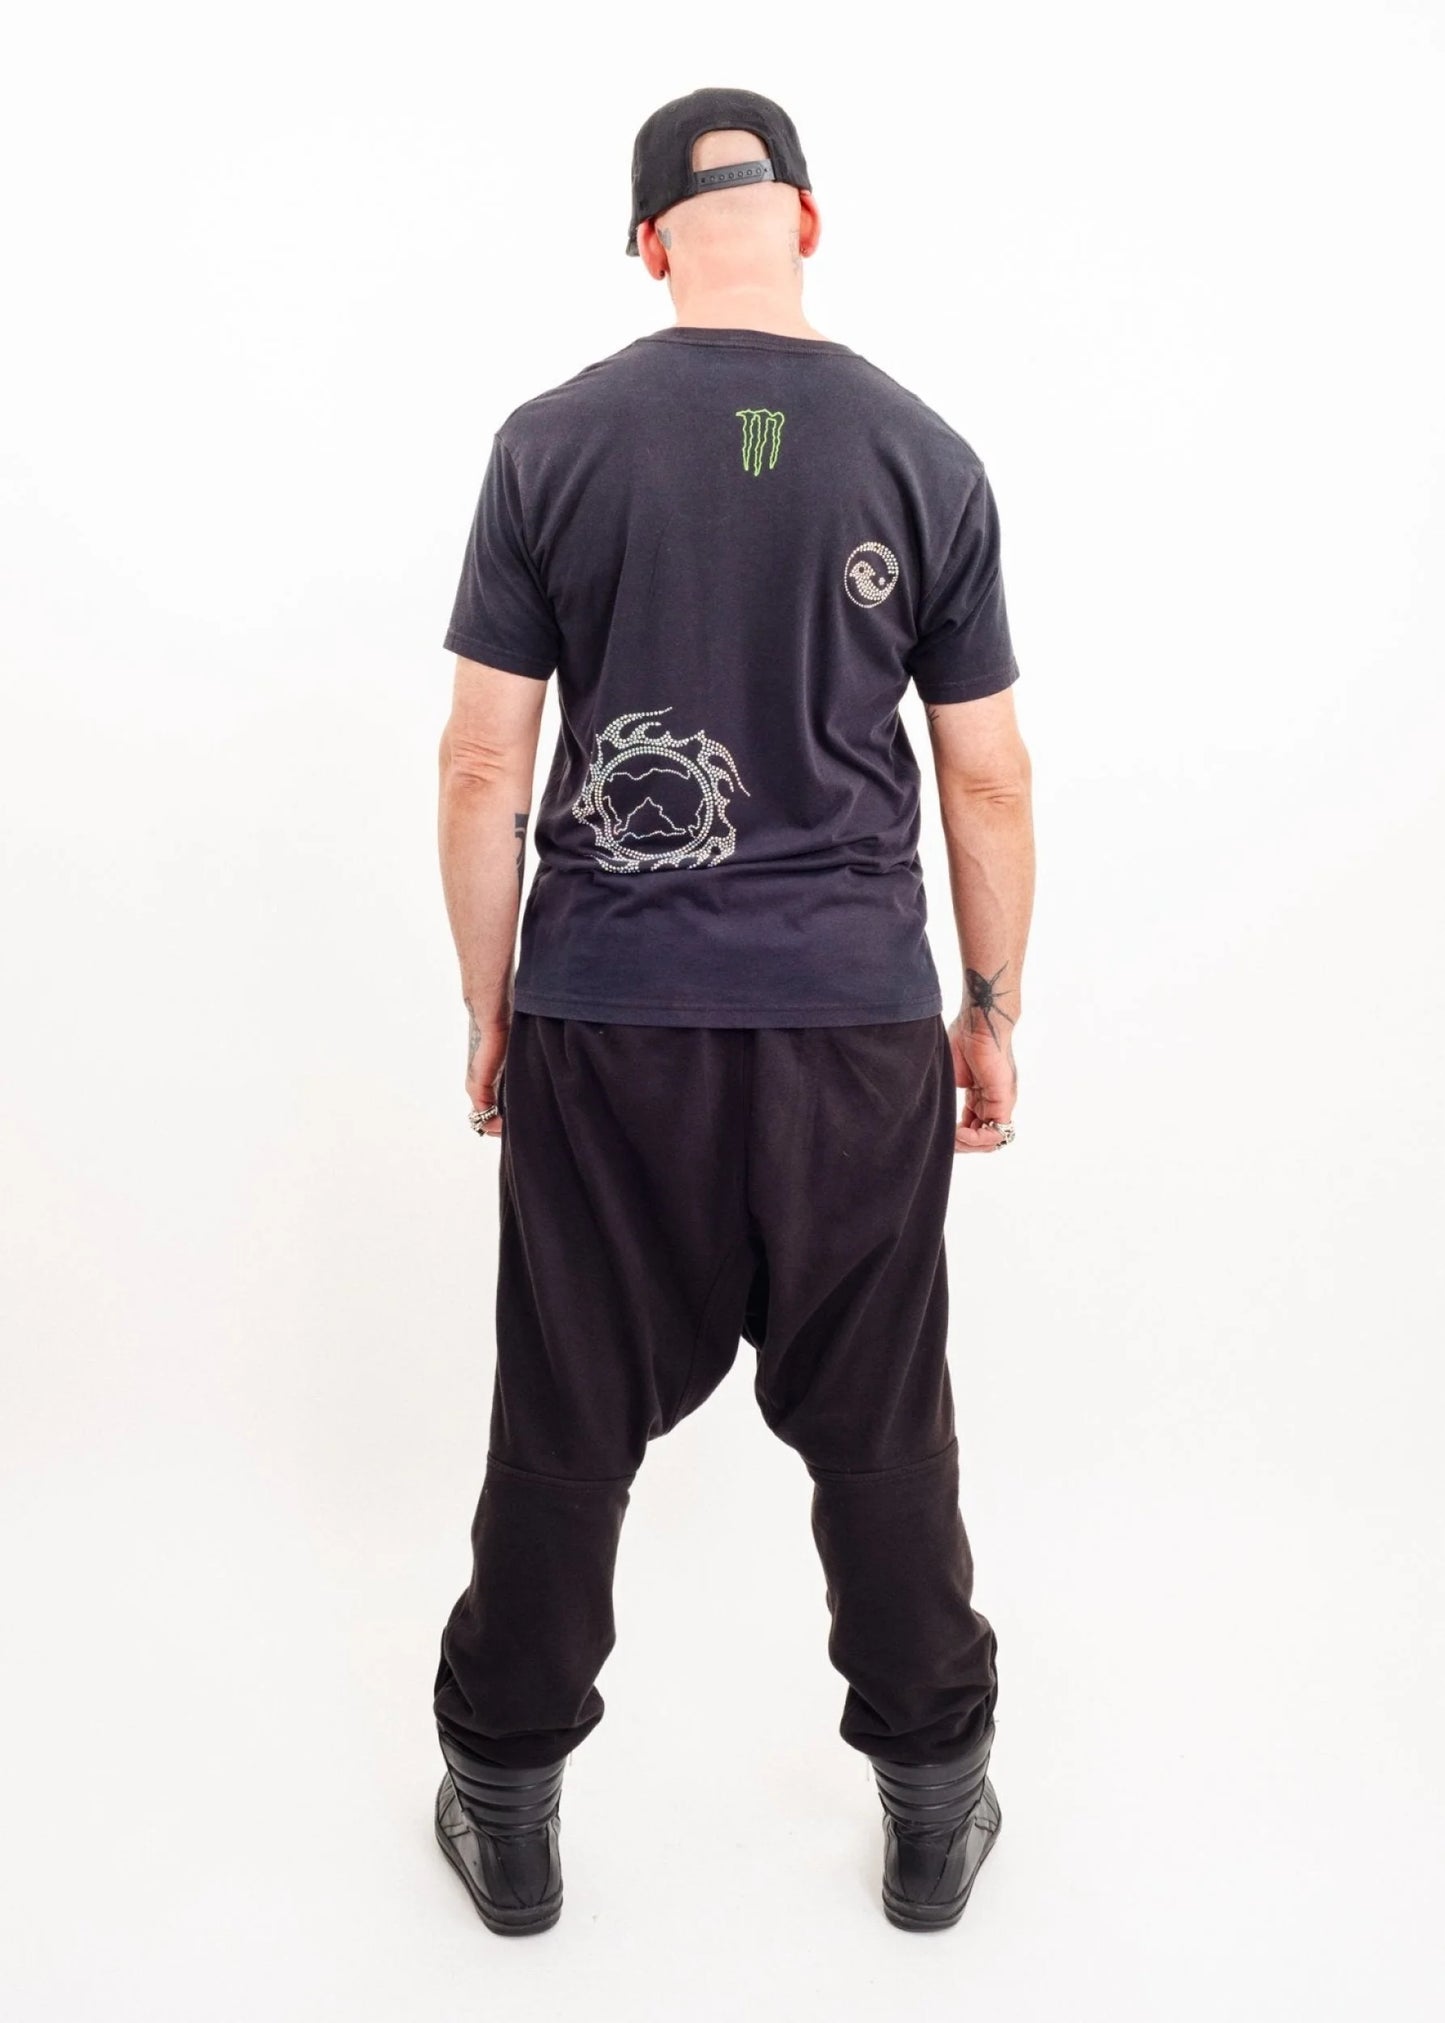 Psyklz Clubsport Bedazzled Monster Energy T-Shirt